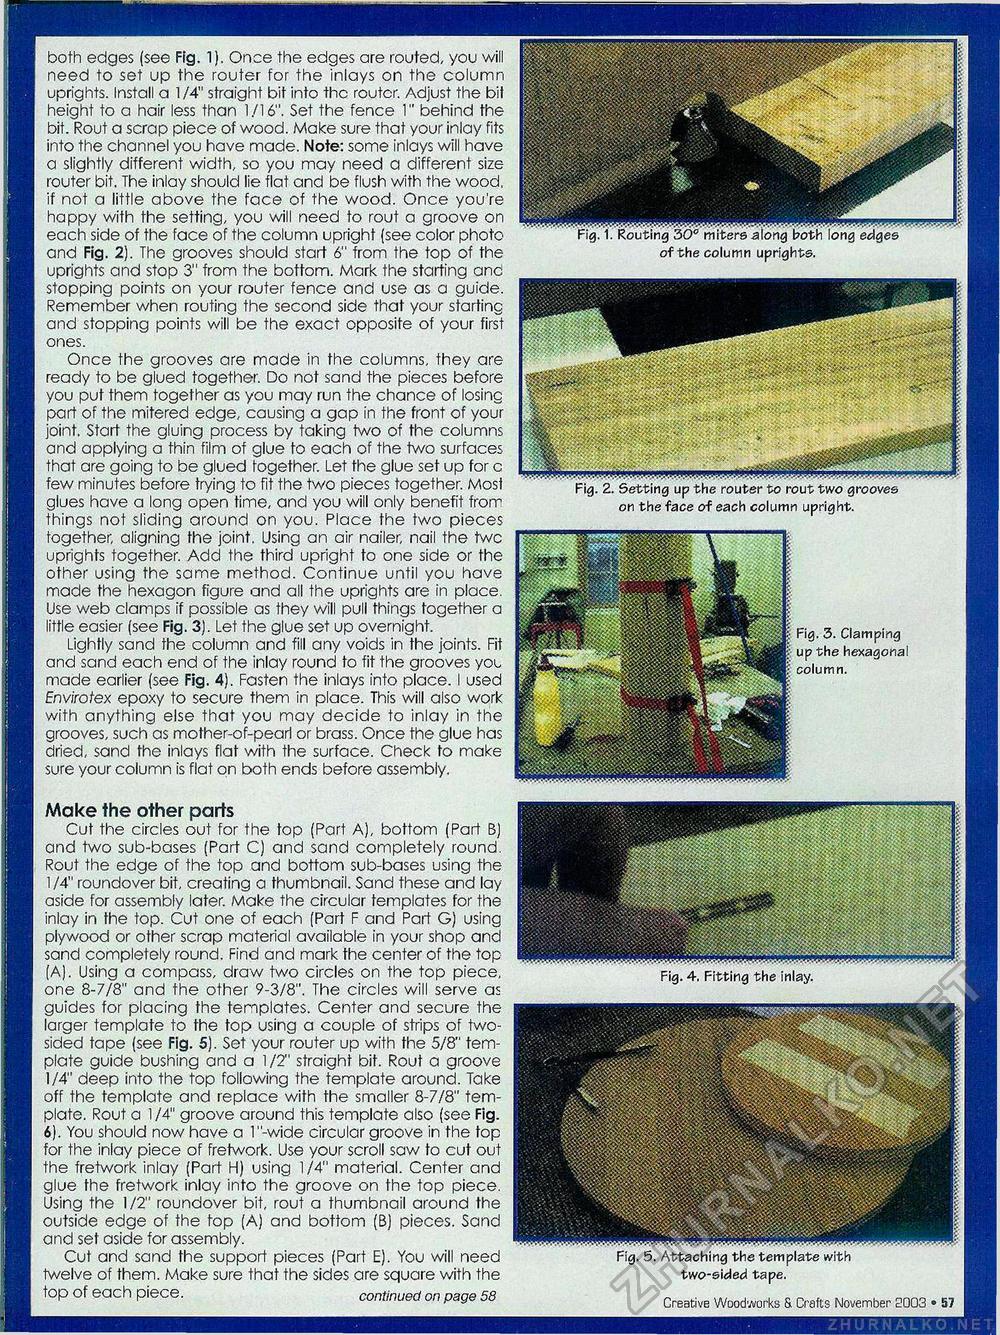 Creative Woodworks & crafts 2003-11,  57